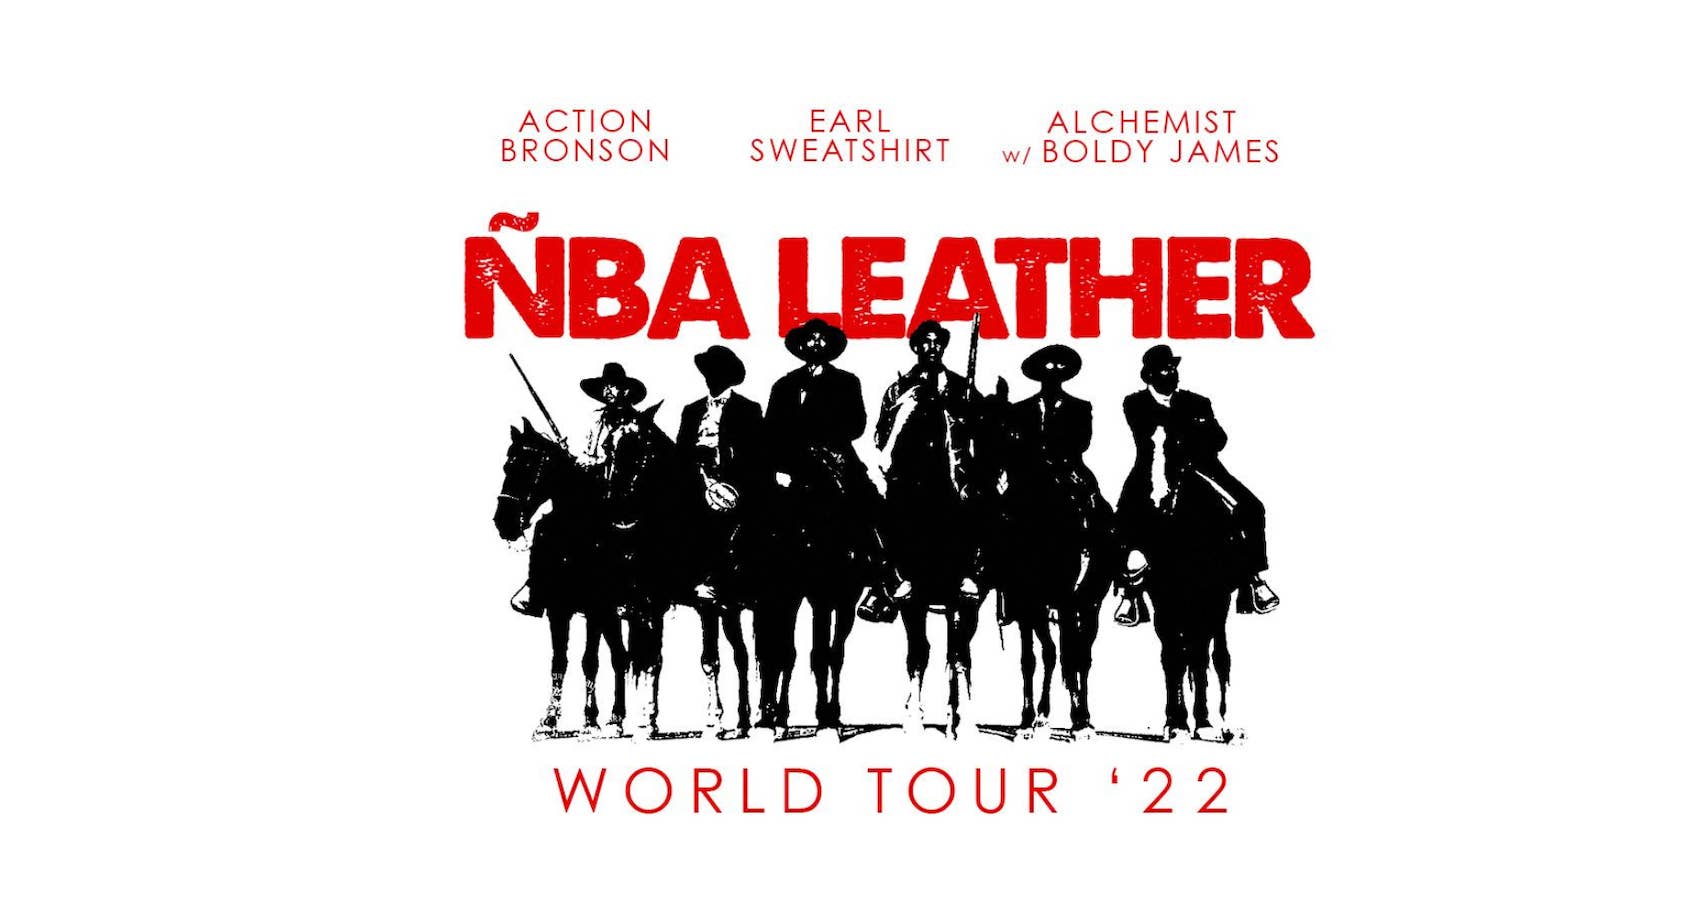 Leather Tour 2022-Earl Sweatshirt-Action Bronson-Alchemist-Boldy